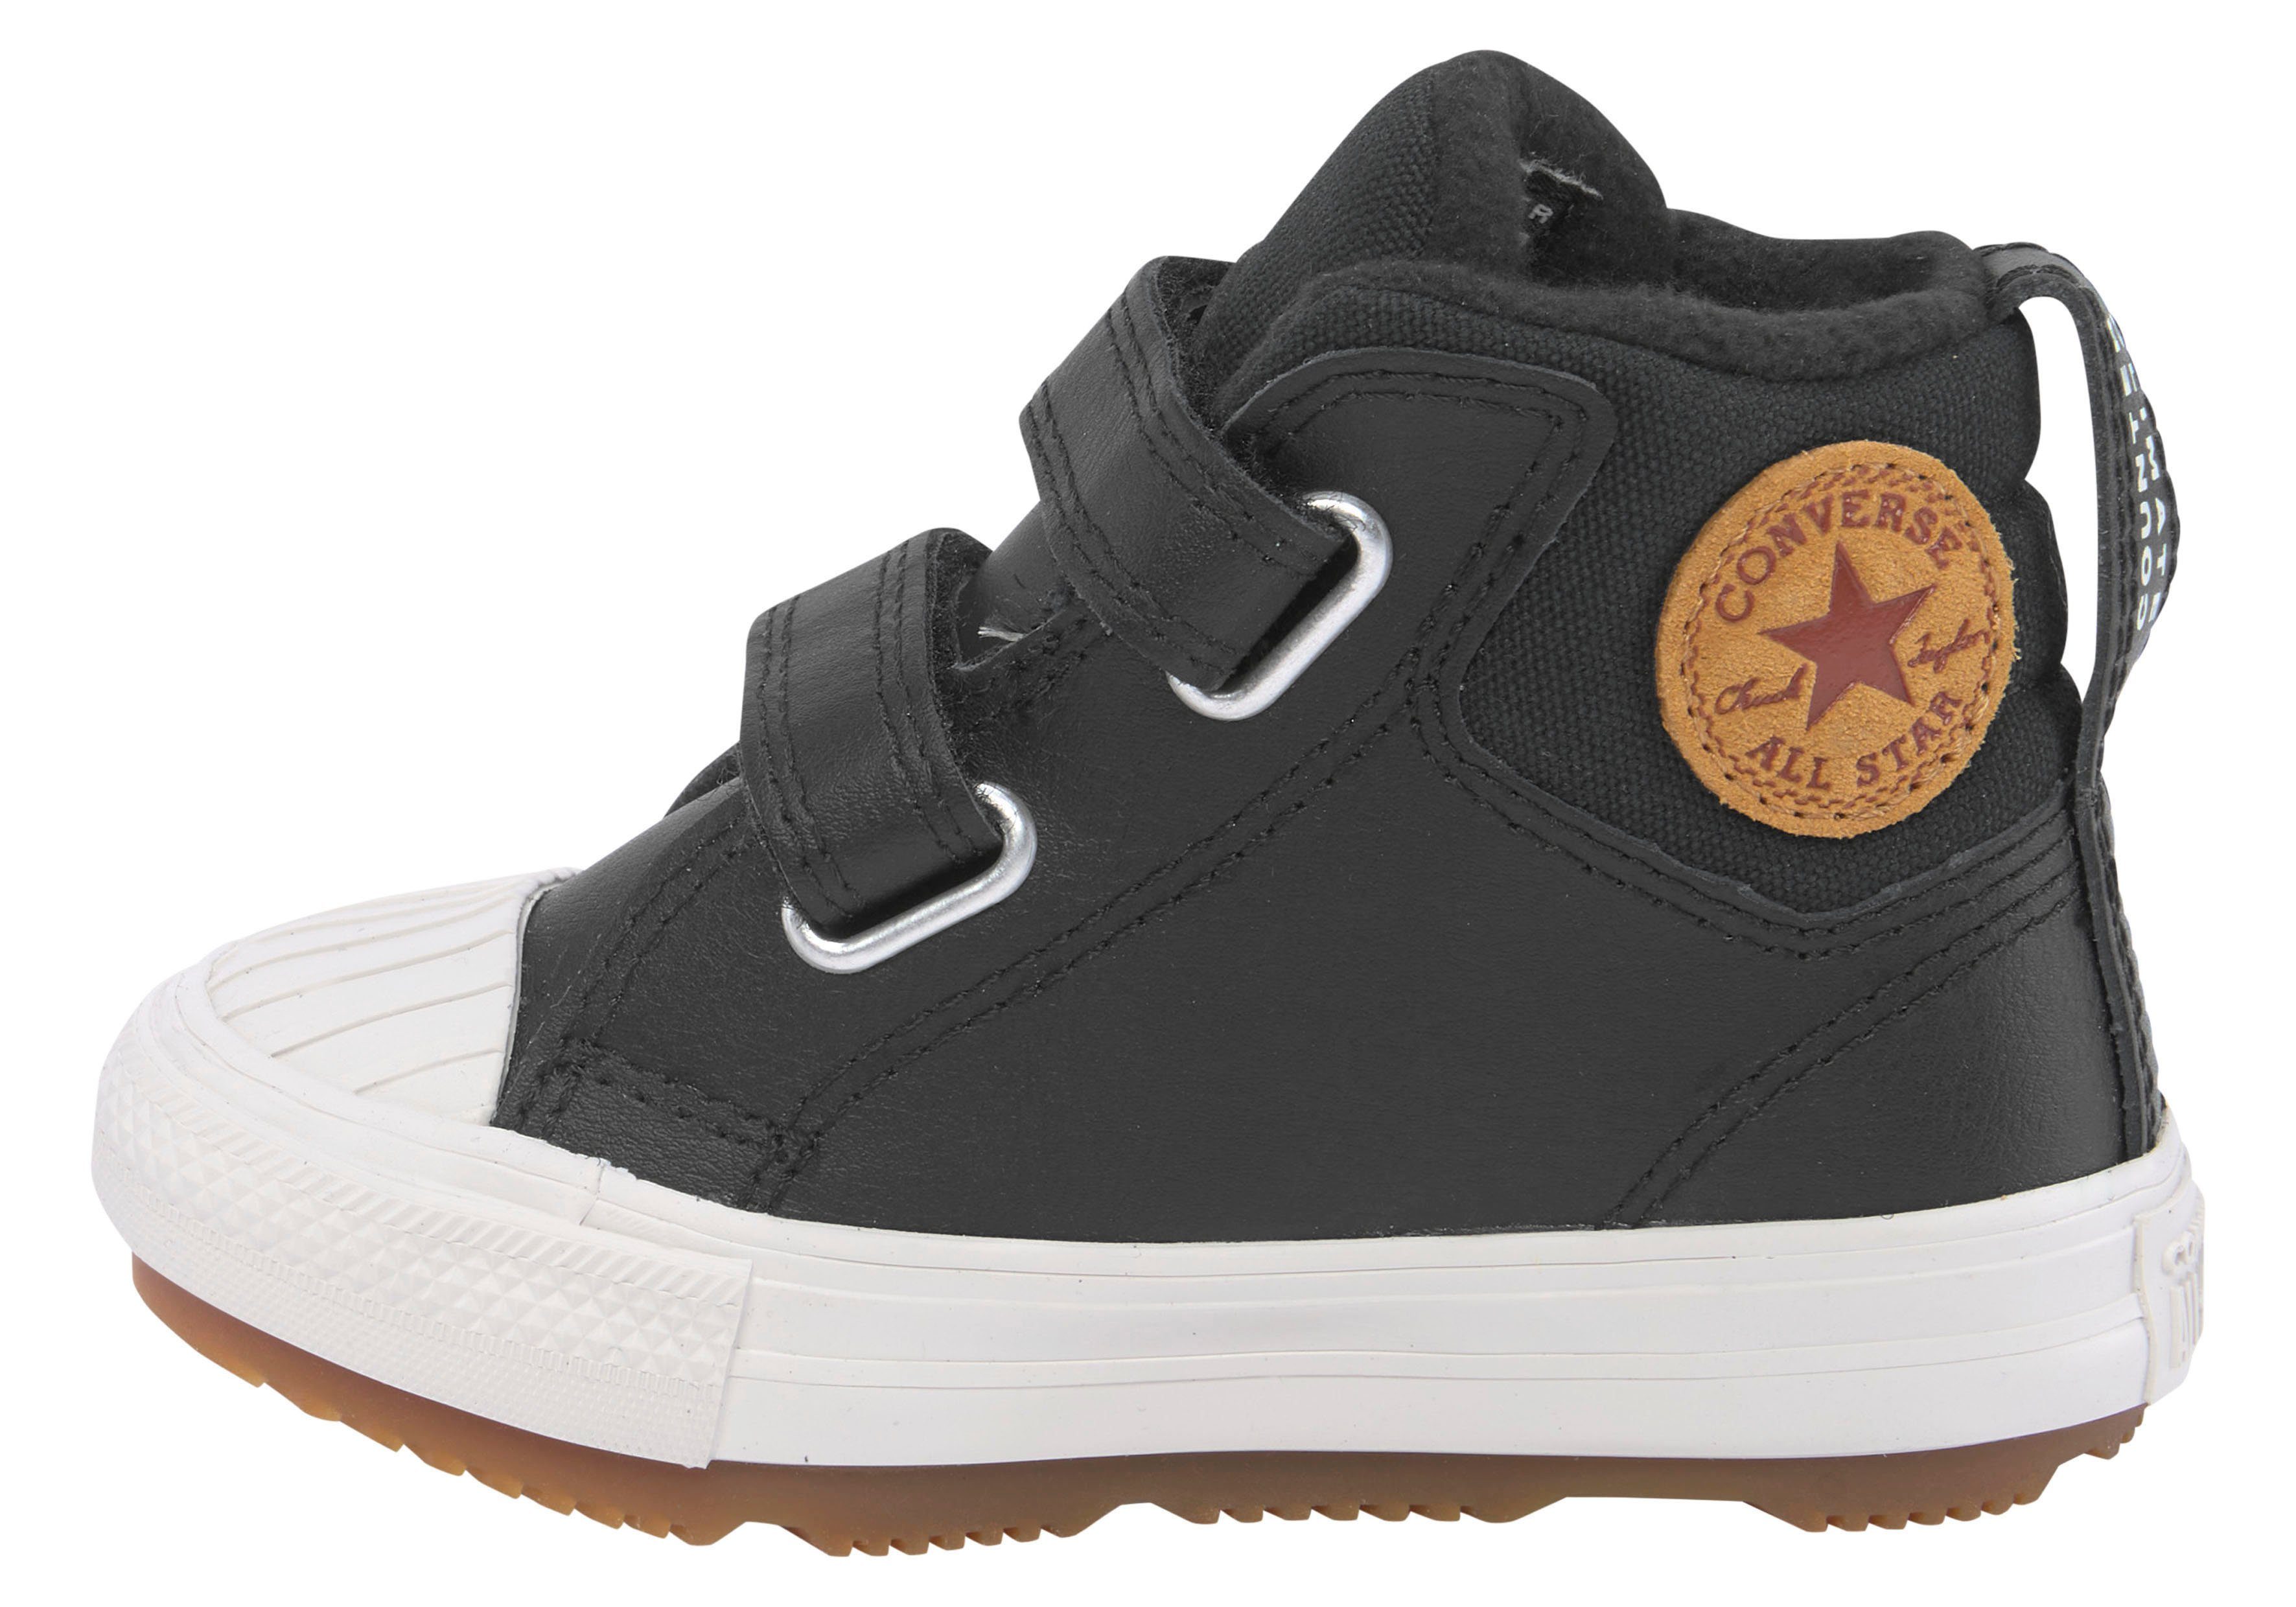 Converse CHUCK TAYLOR ALL STAR mit BOOT LEATHER 2V schwarz Klettverschluss Sneakerboots BERKSHIRE